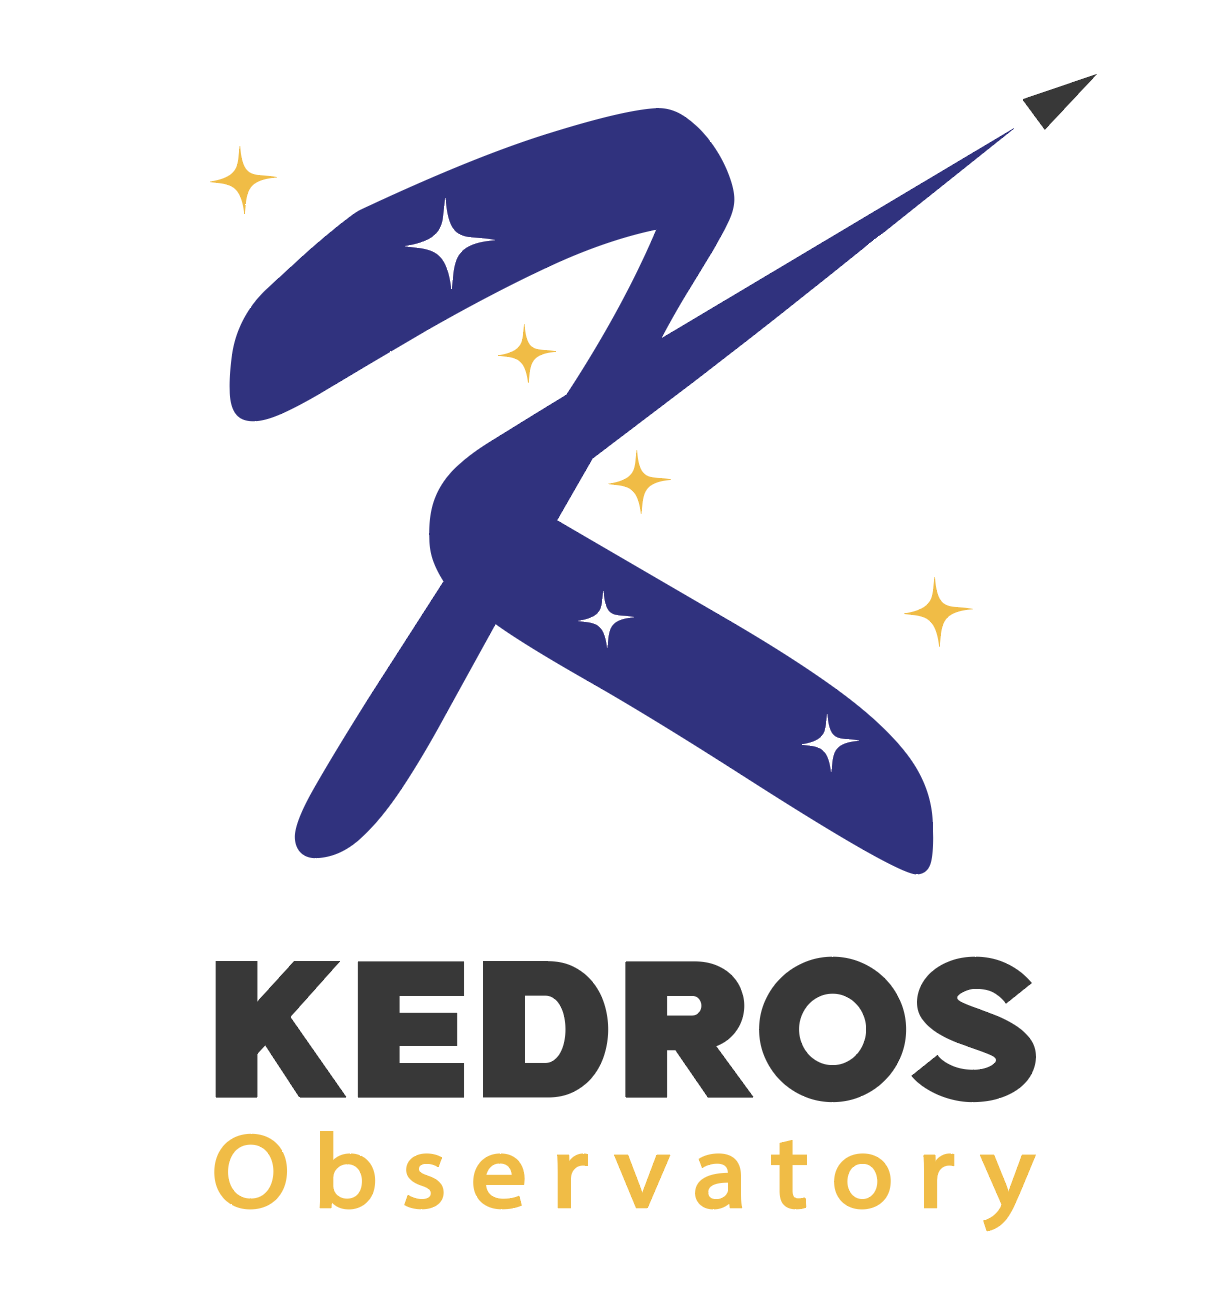 Kedros Observatory